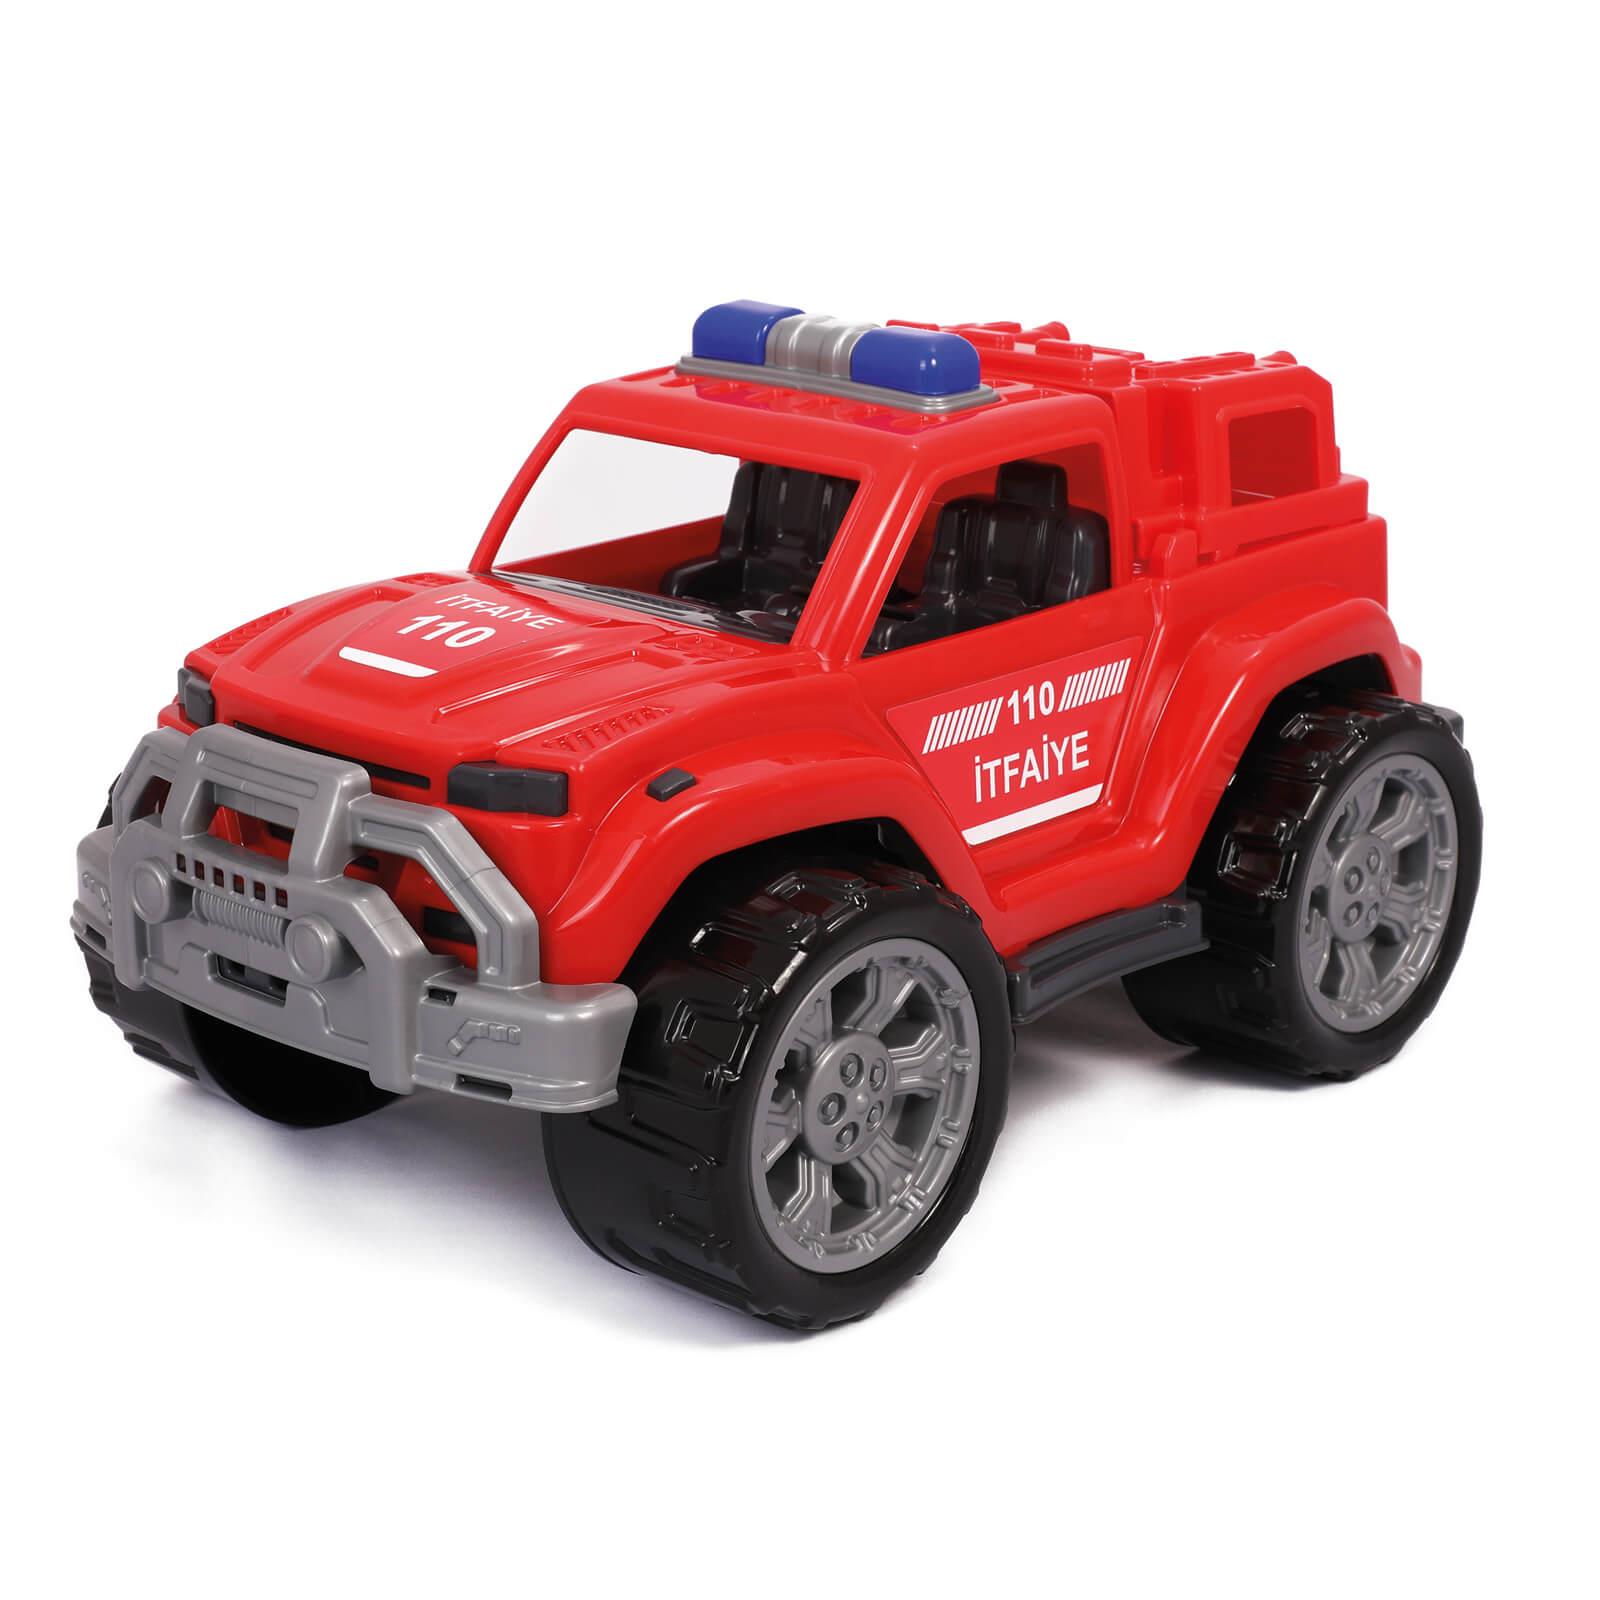 Samochód Jeep Legion straż pożarna